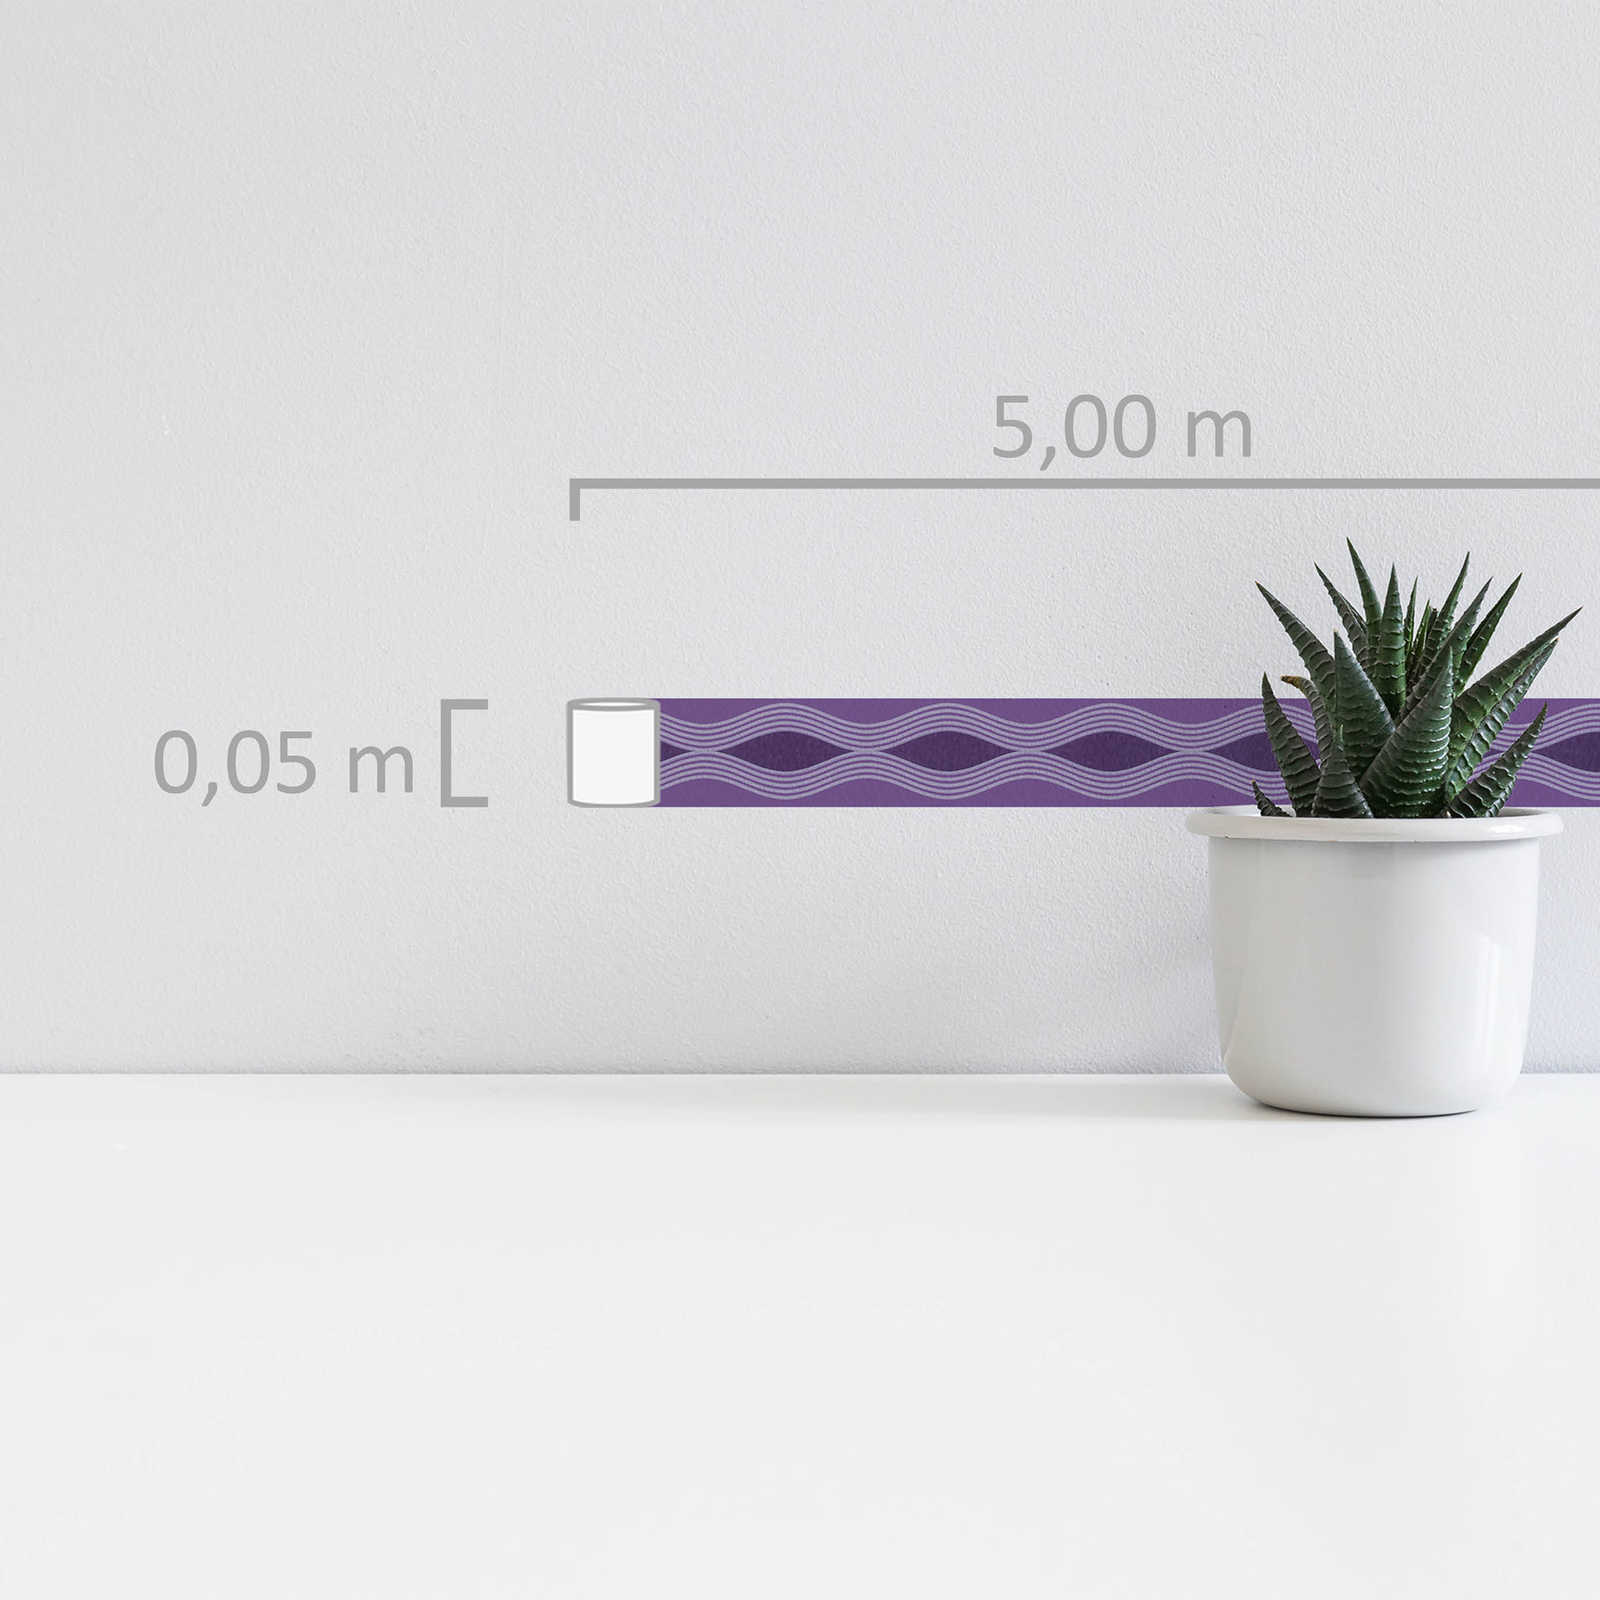             Purple border with graphic design and line pattern - Purple, White
        